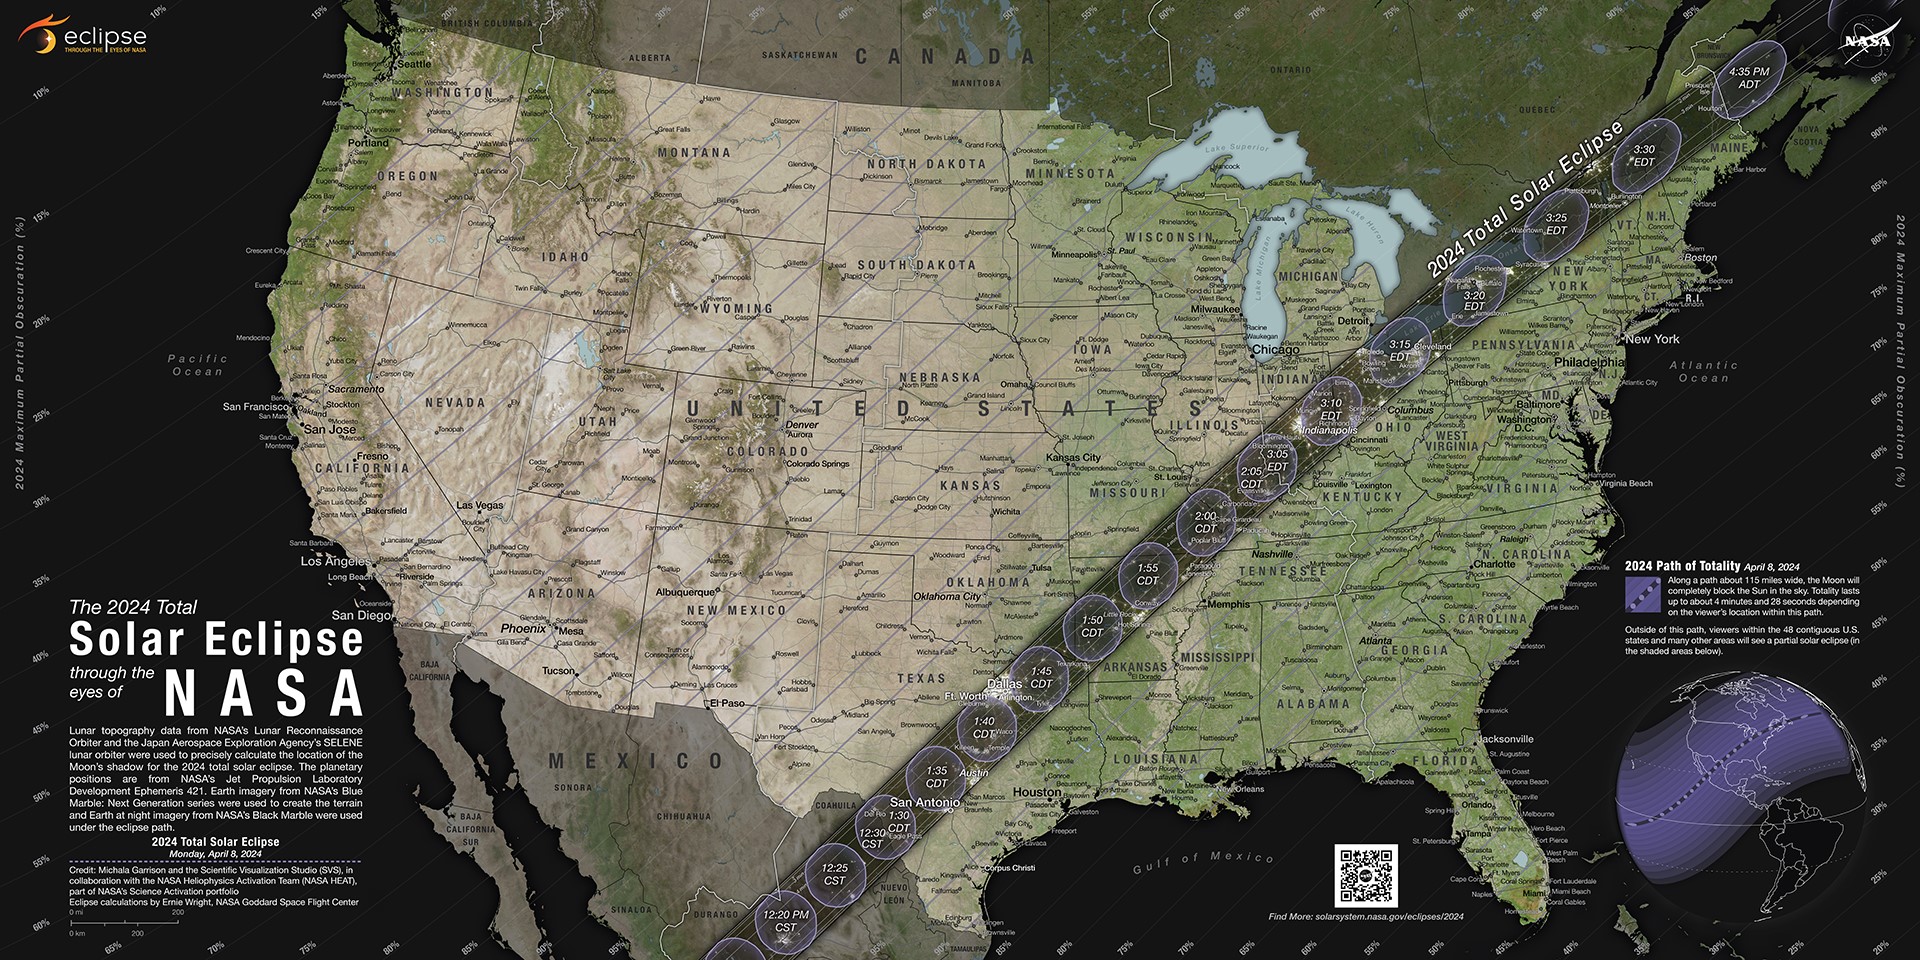 2024 Eclipse map courtesy of NASA